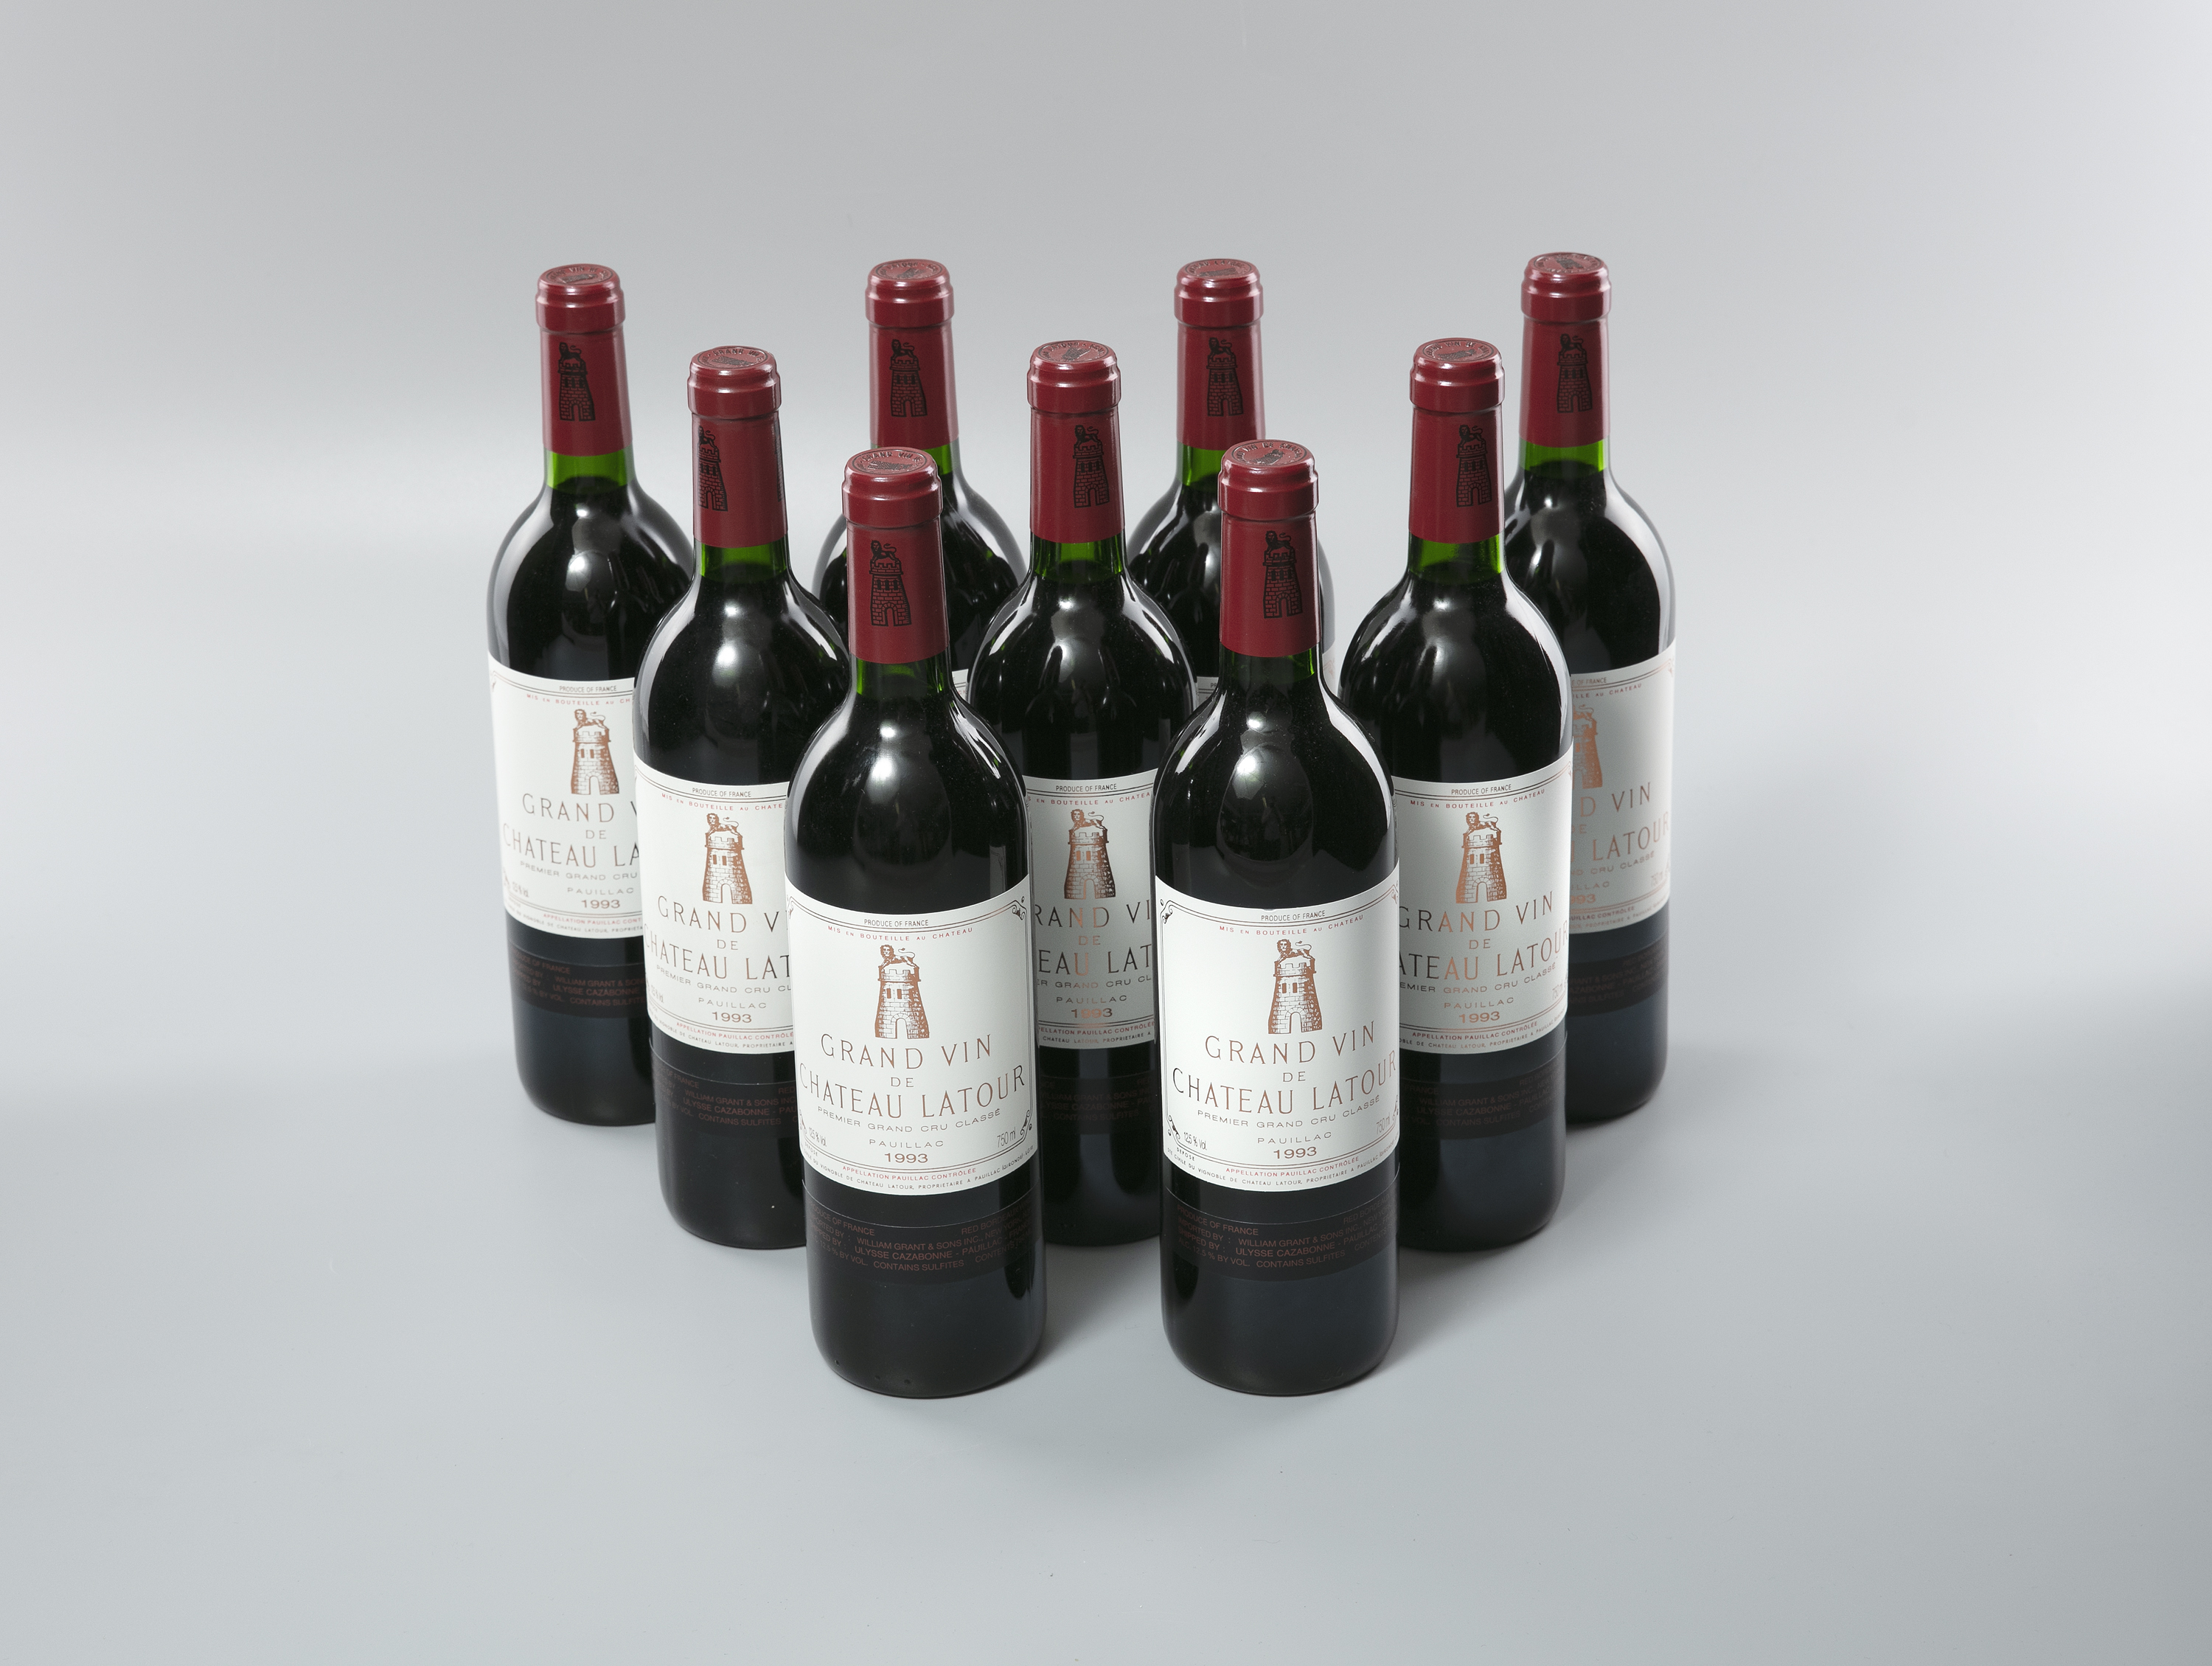 CHATEAU LATOUR Pauillac, 1993 9 bottles - Image 11 of 14